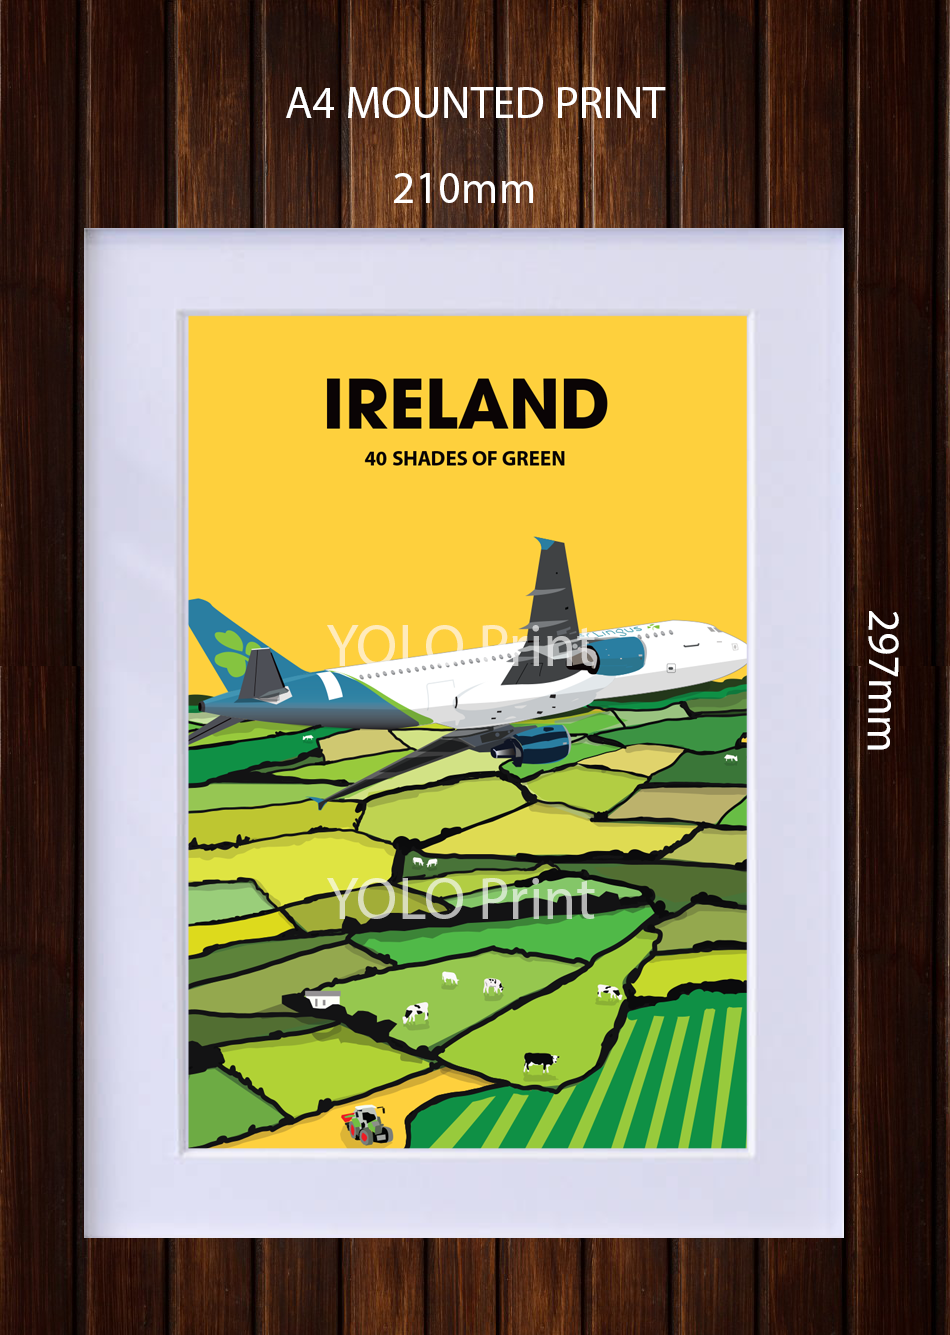 Irish Postcard or A4 Mounted Print or Fridge Magnet - 40 Shades of Green